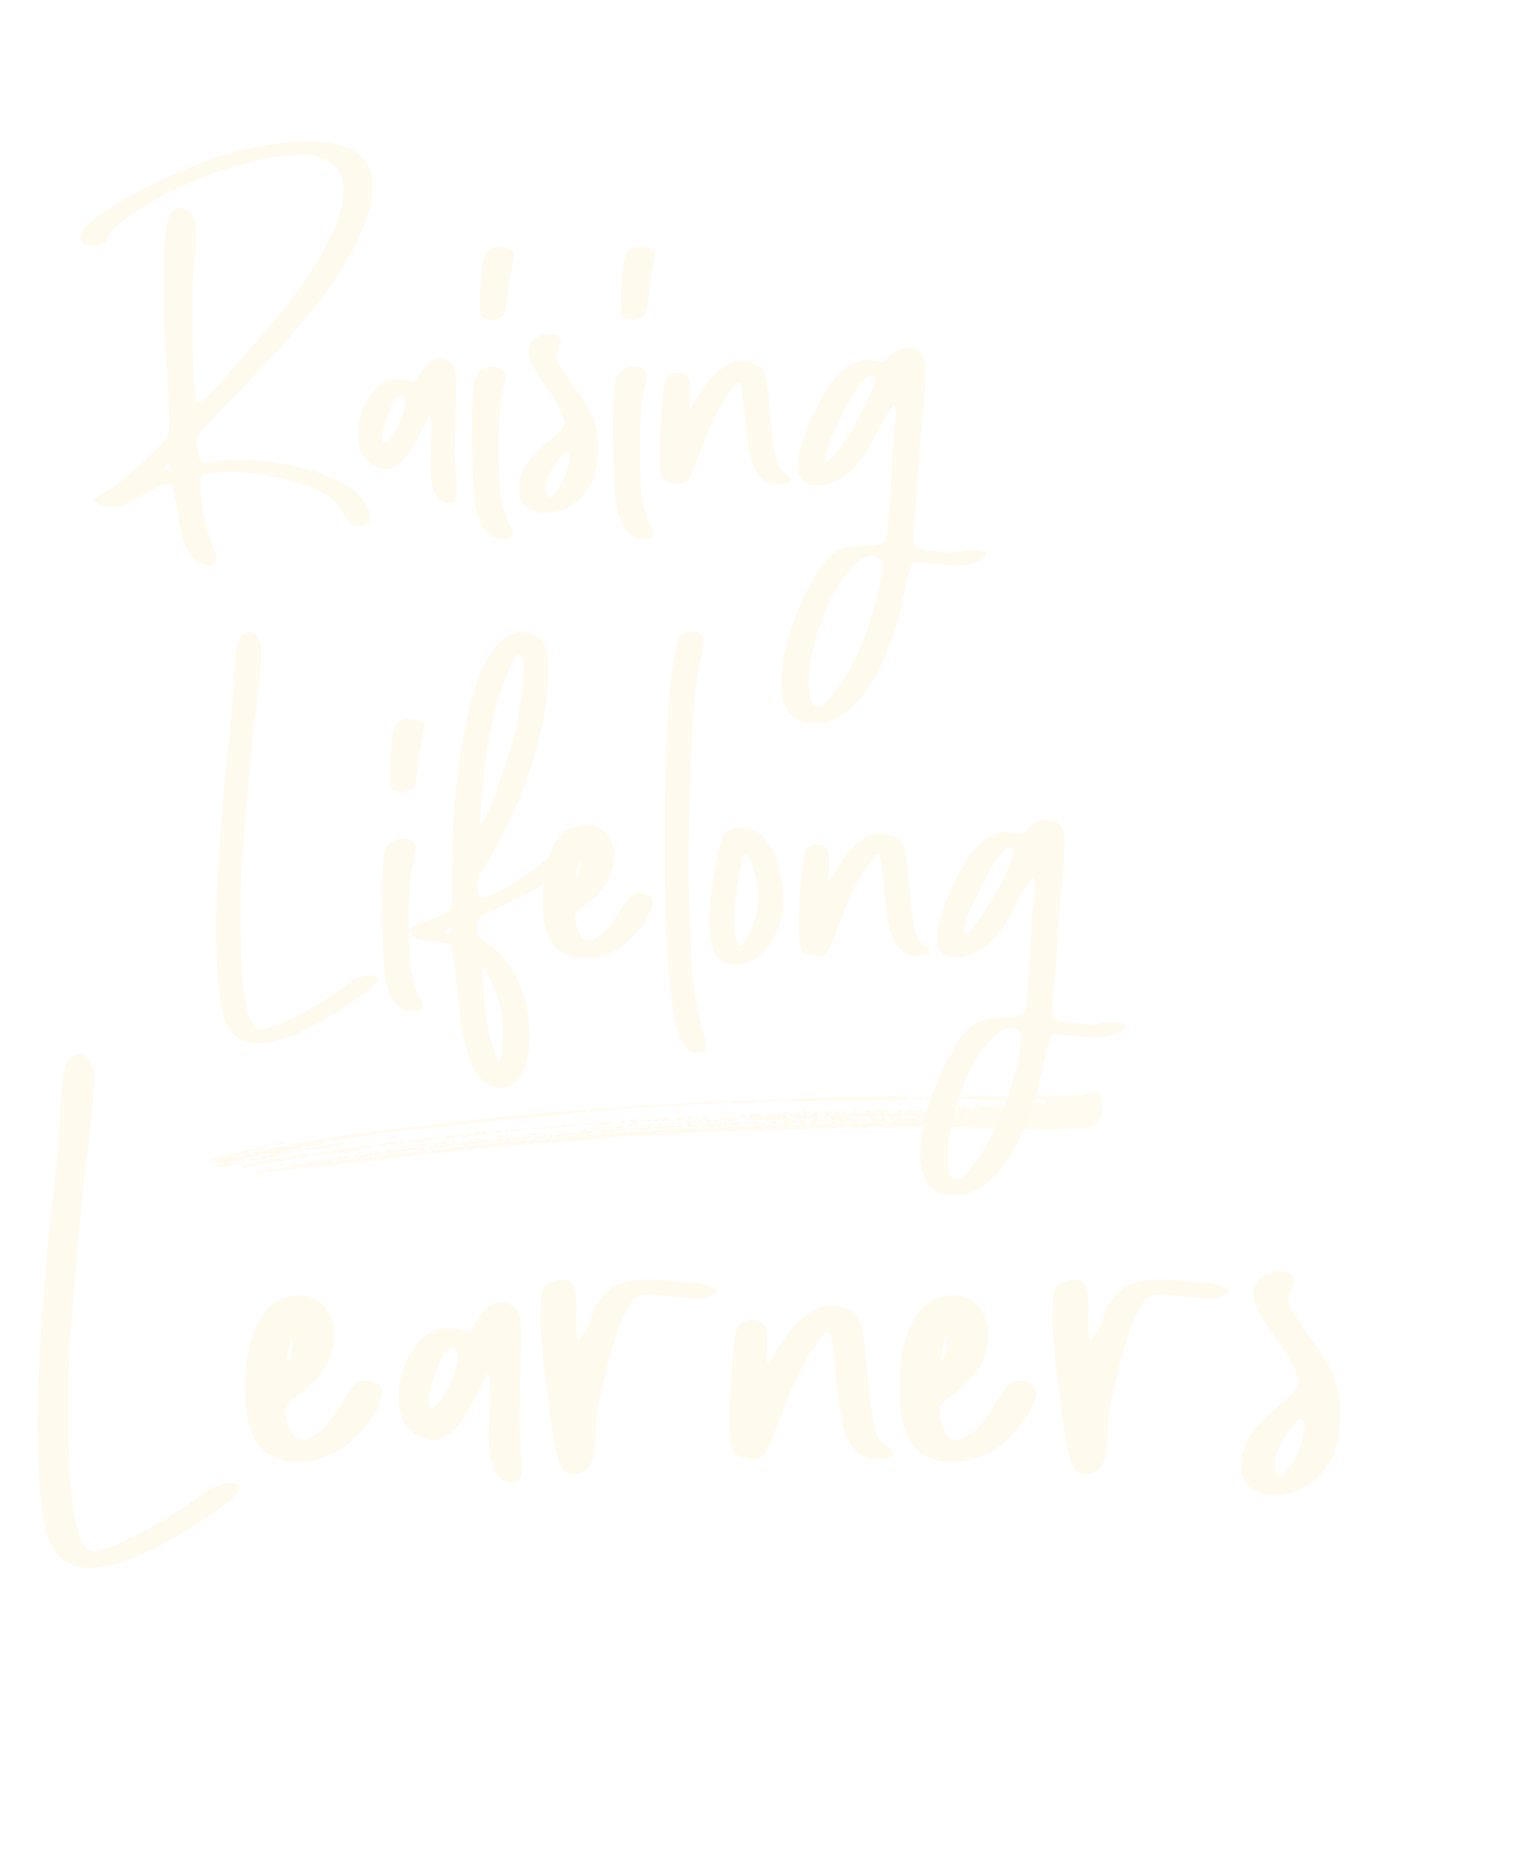 Raiding Lifelong Learners